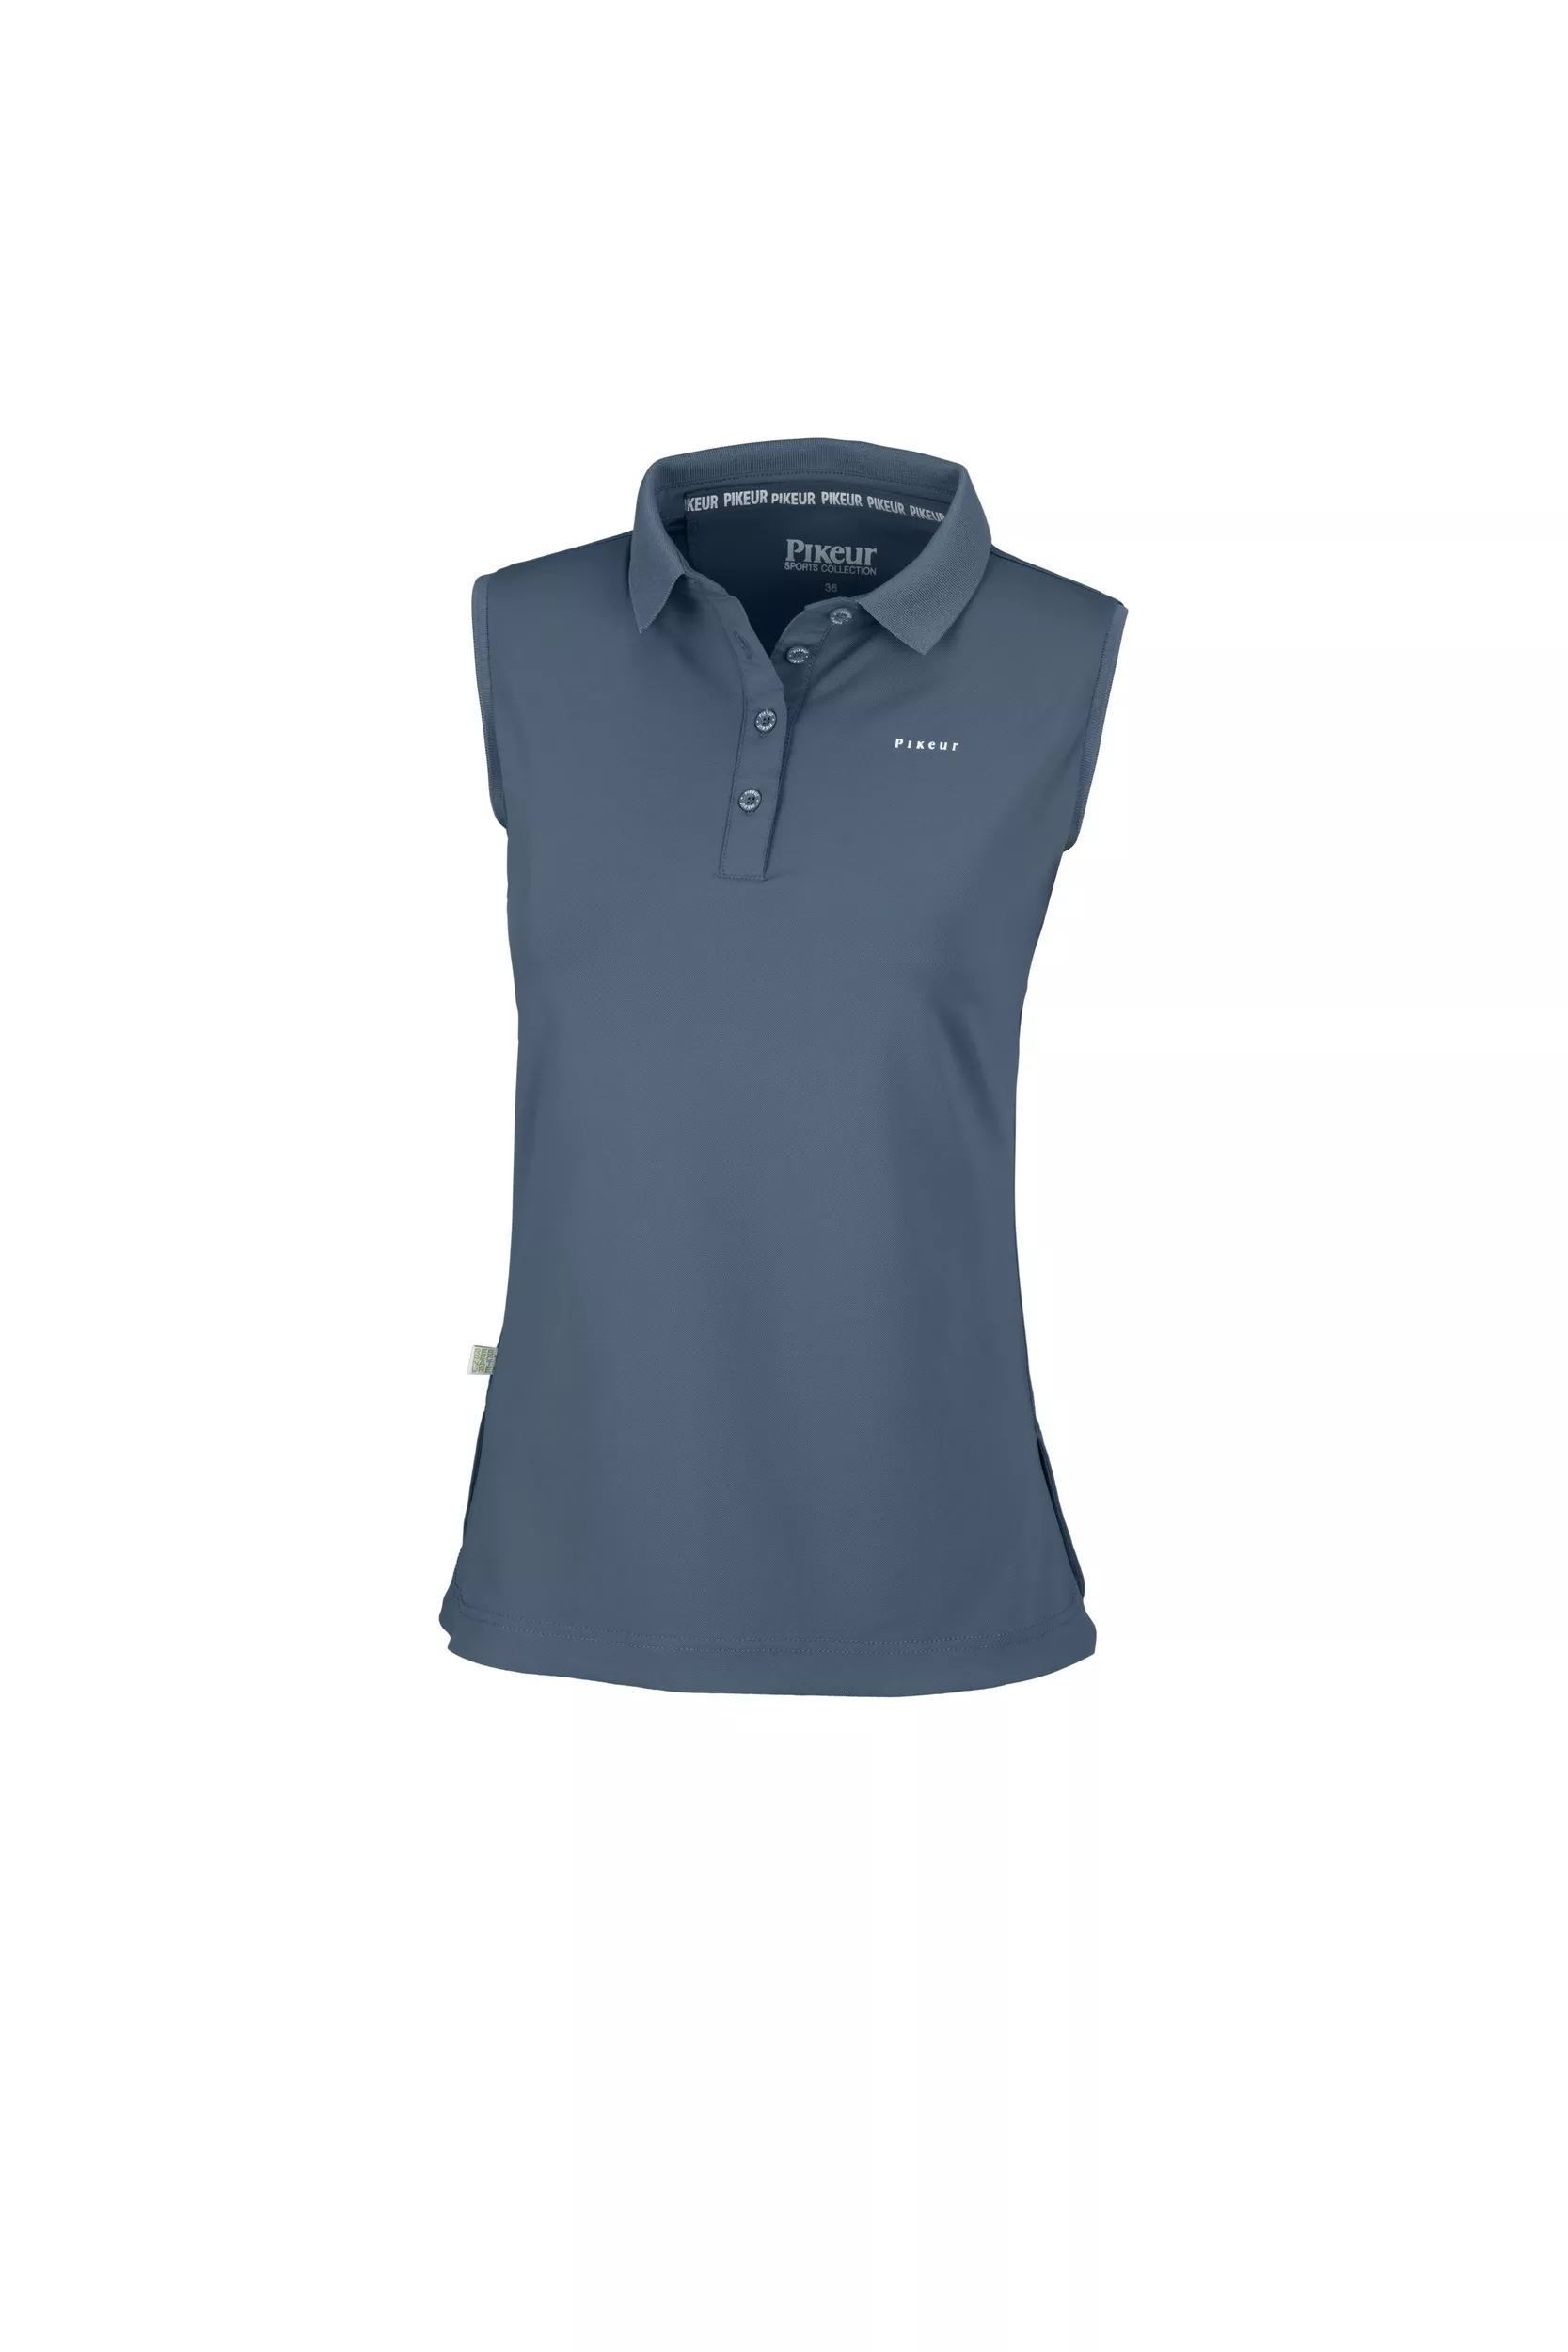 Funktions-Poloshirt JARLA, ärmellos, Damen, Sportswear 22, vintage blue